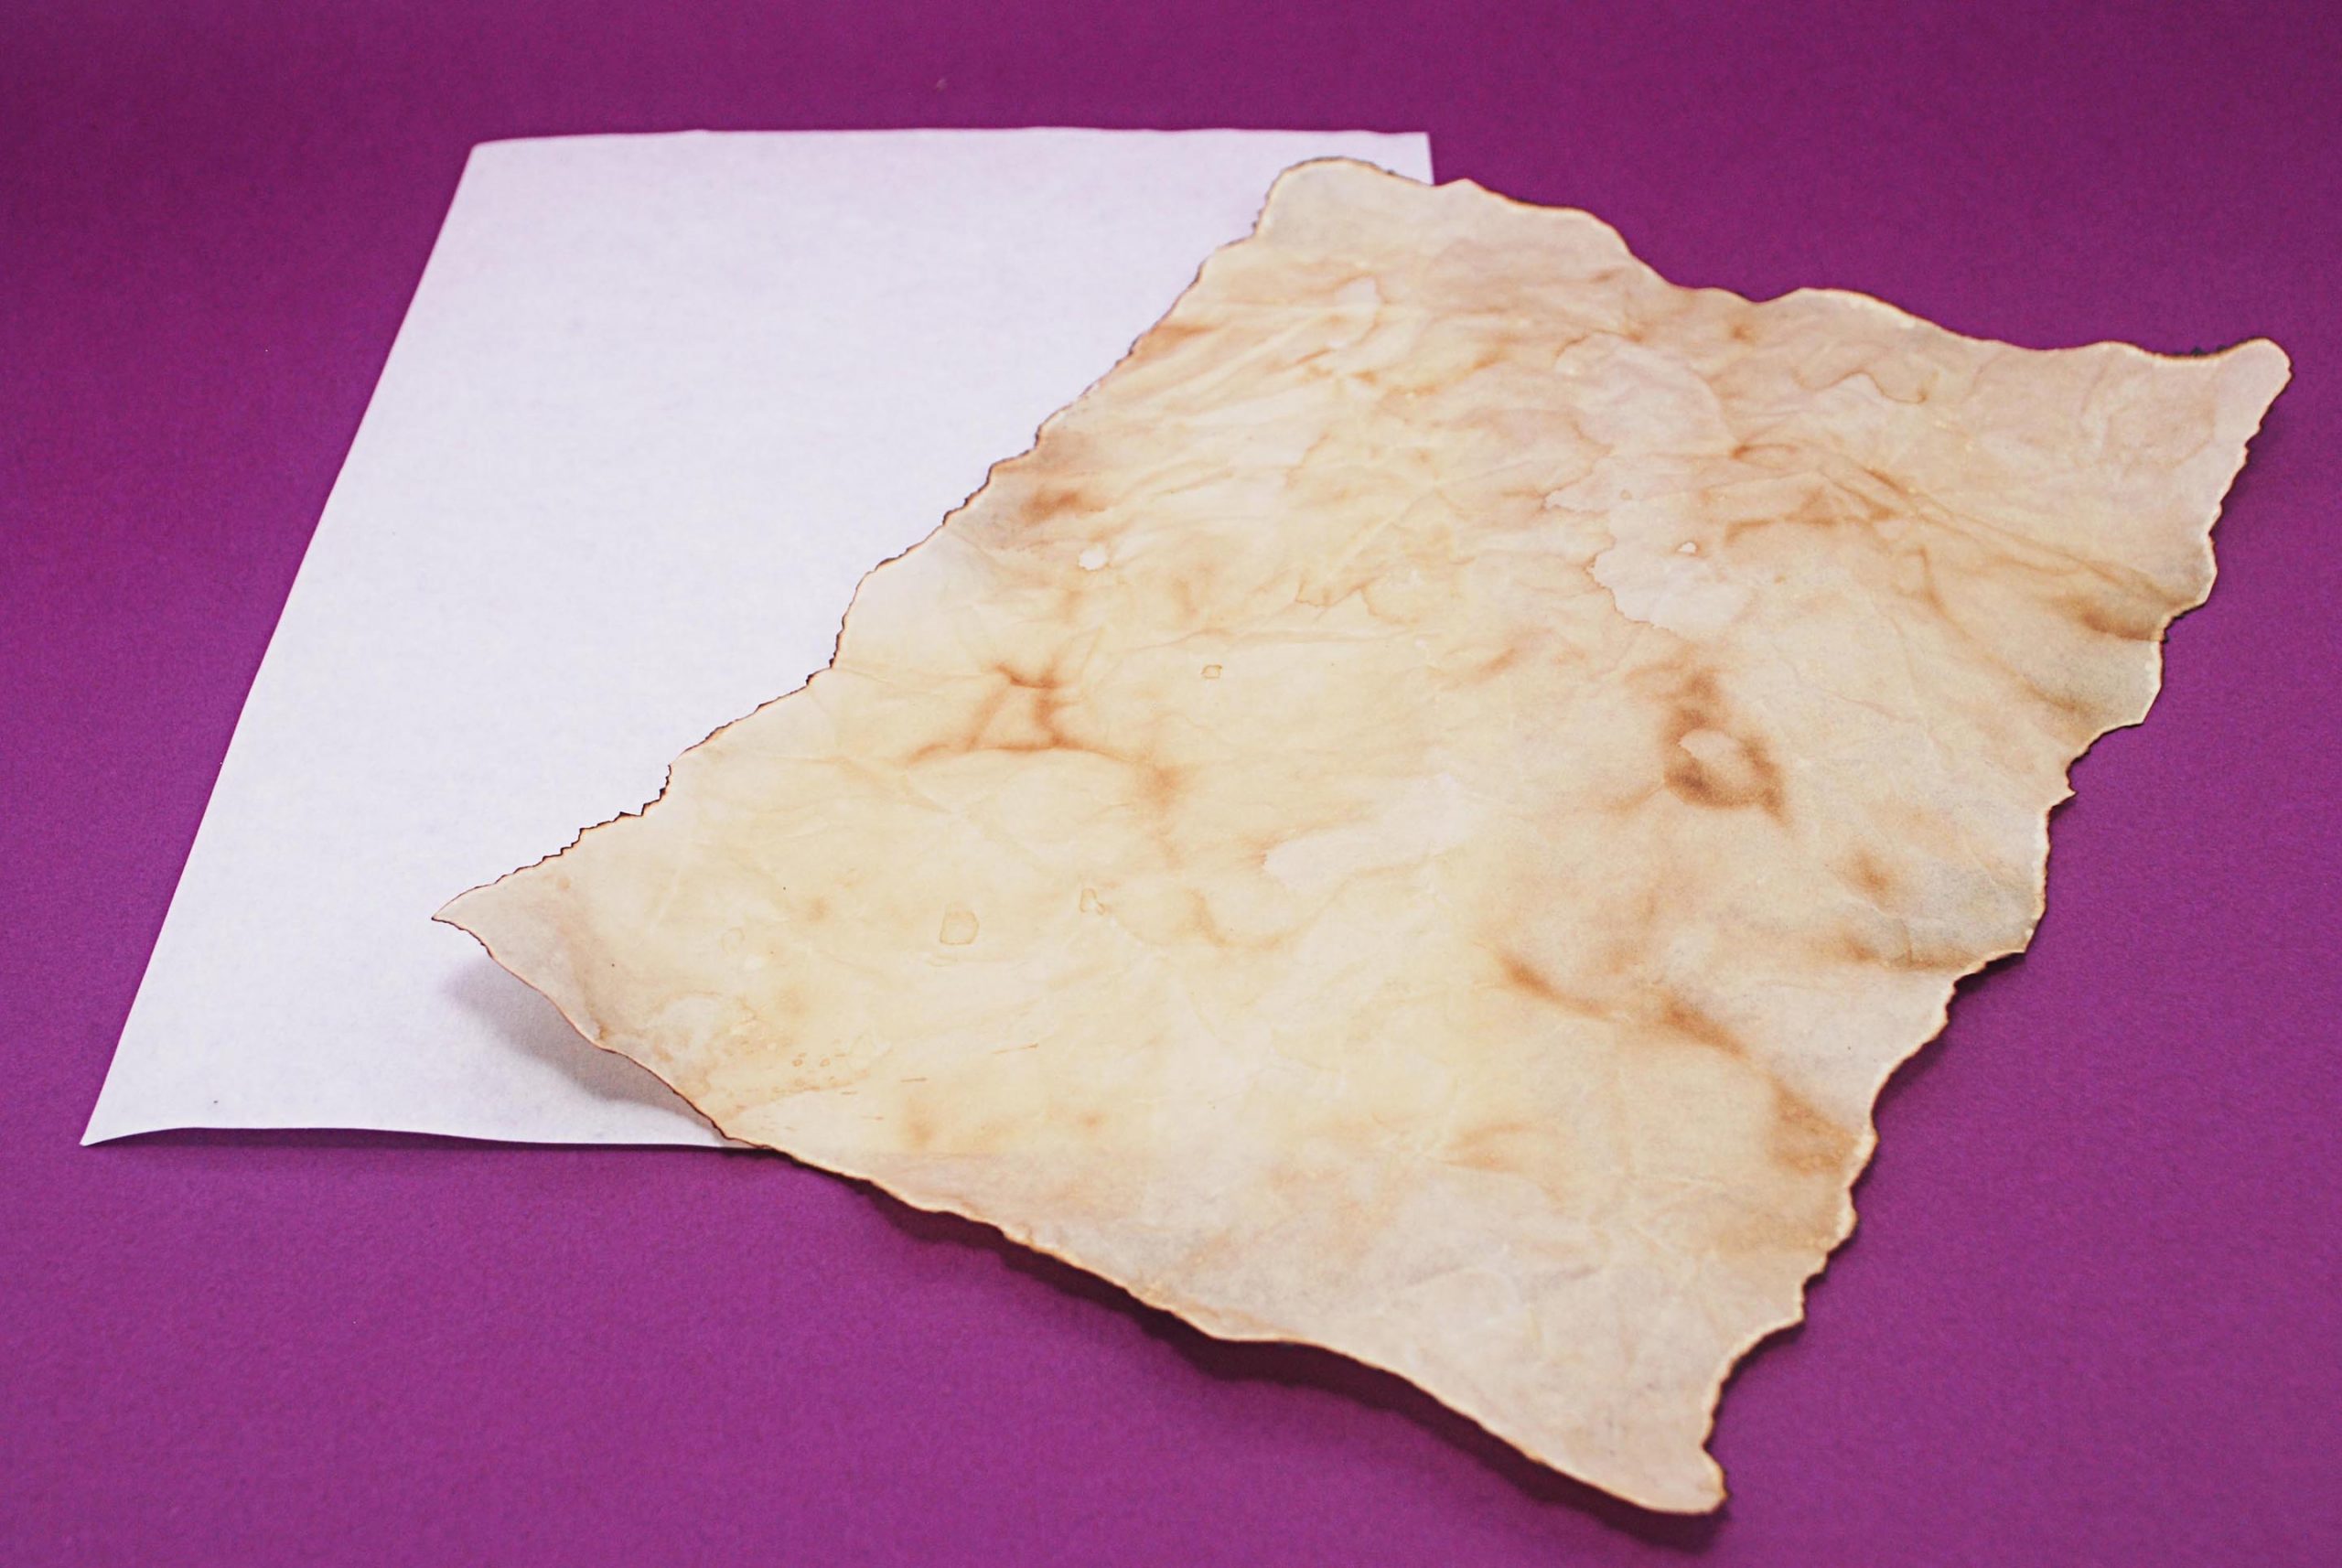 Parchment paper has many benefits 